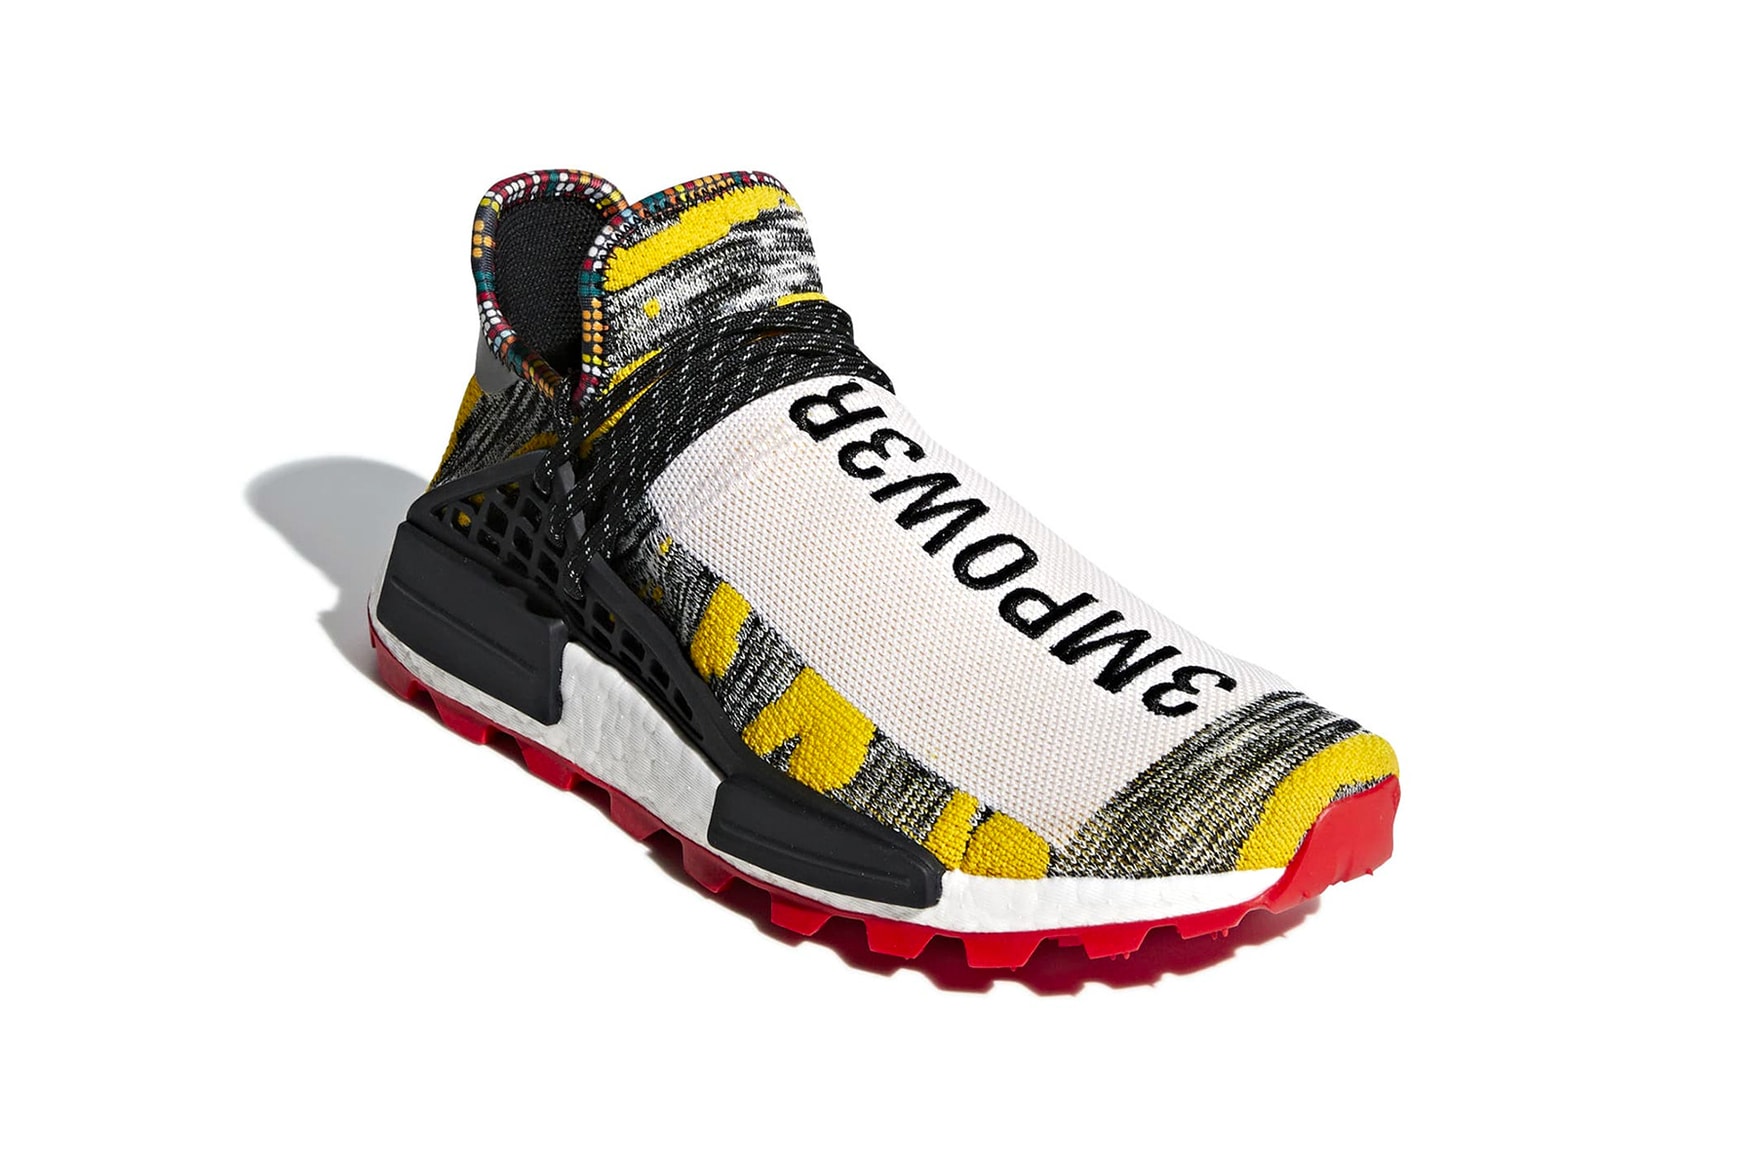 Pharrell williams x adidas originals NMD Hu "Solar" Pack Release Date info sneakers multi color 2018 price